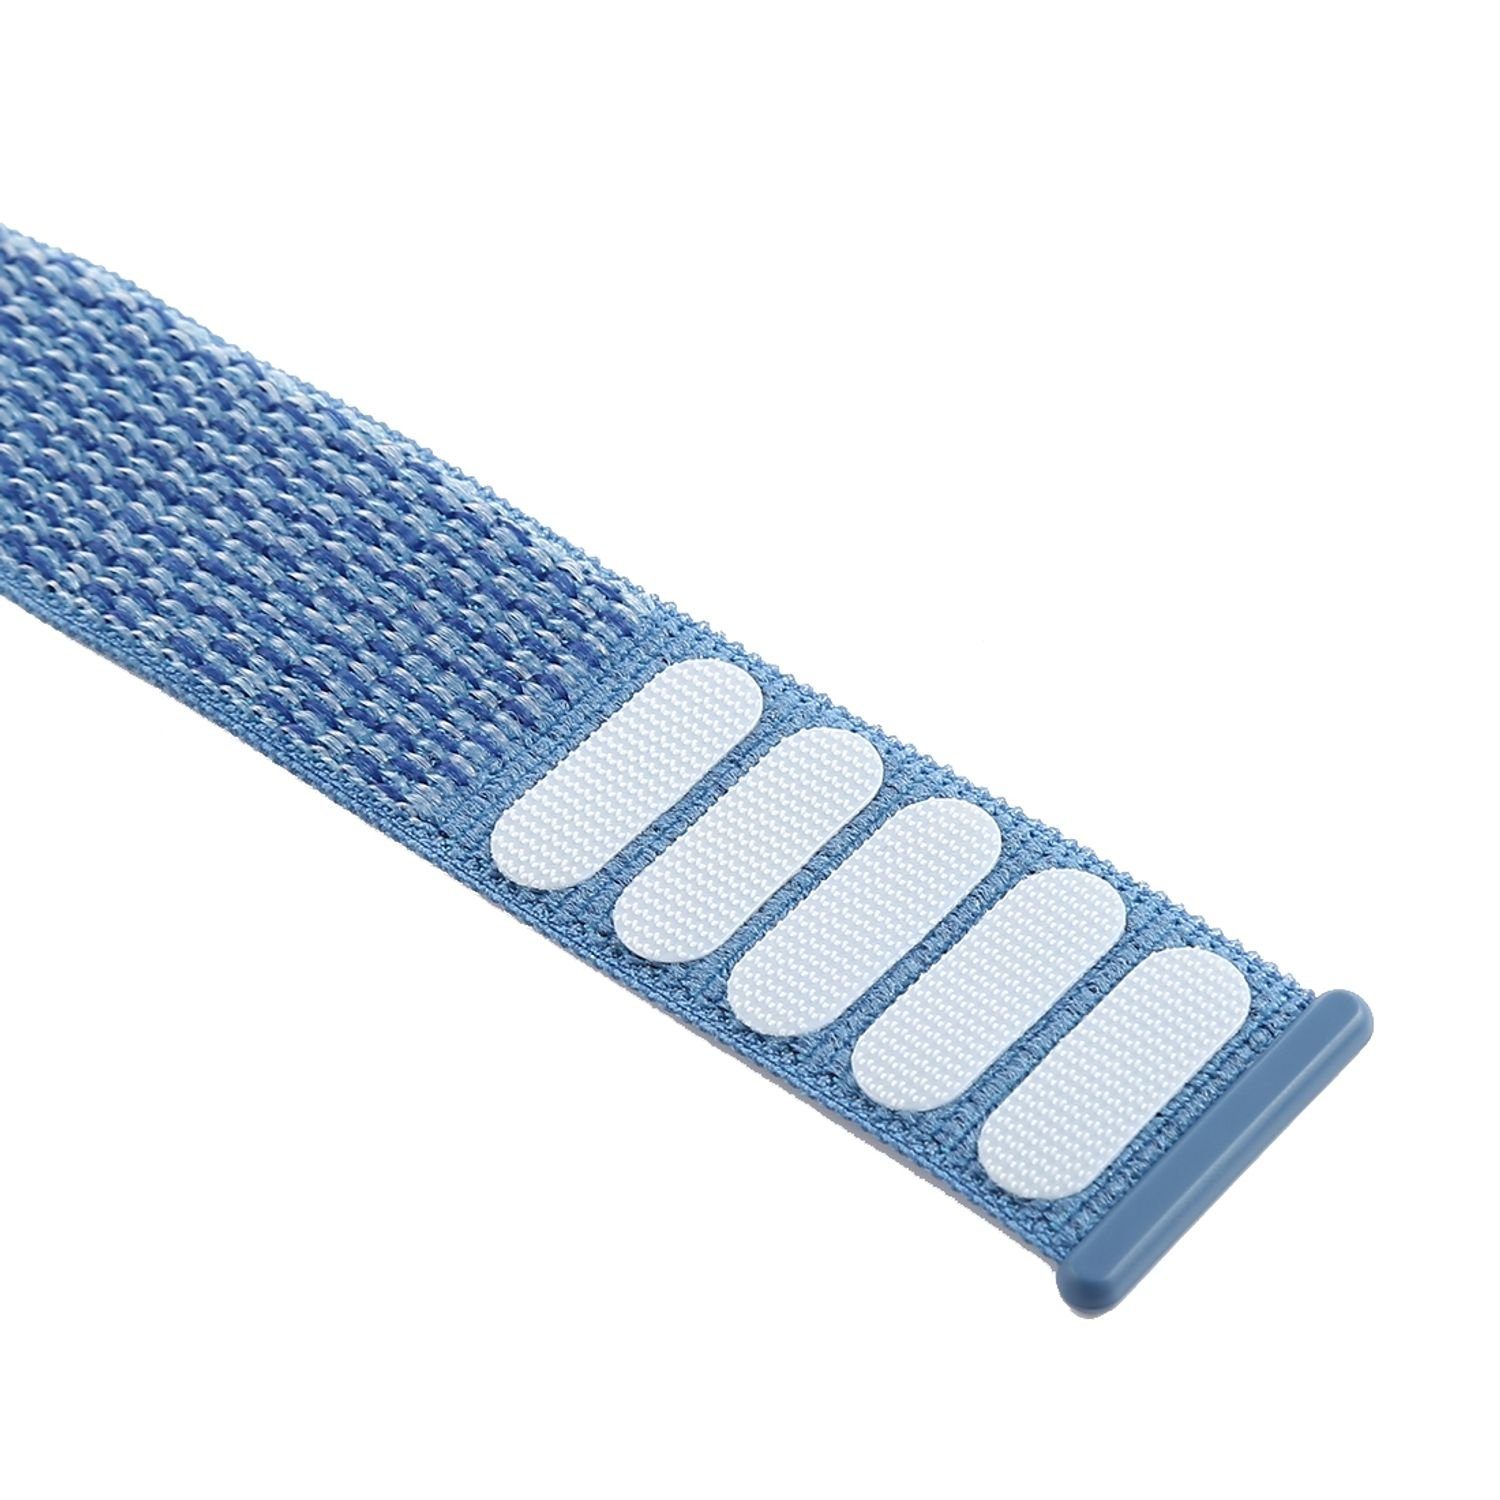 König Design 44 Armband Blau Loop 45 42 mm mm / Band Smartwatch-Armband Pfauen / Nylon mm, Arm Sport